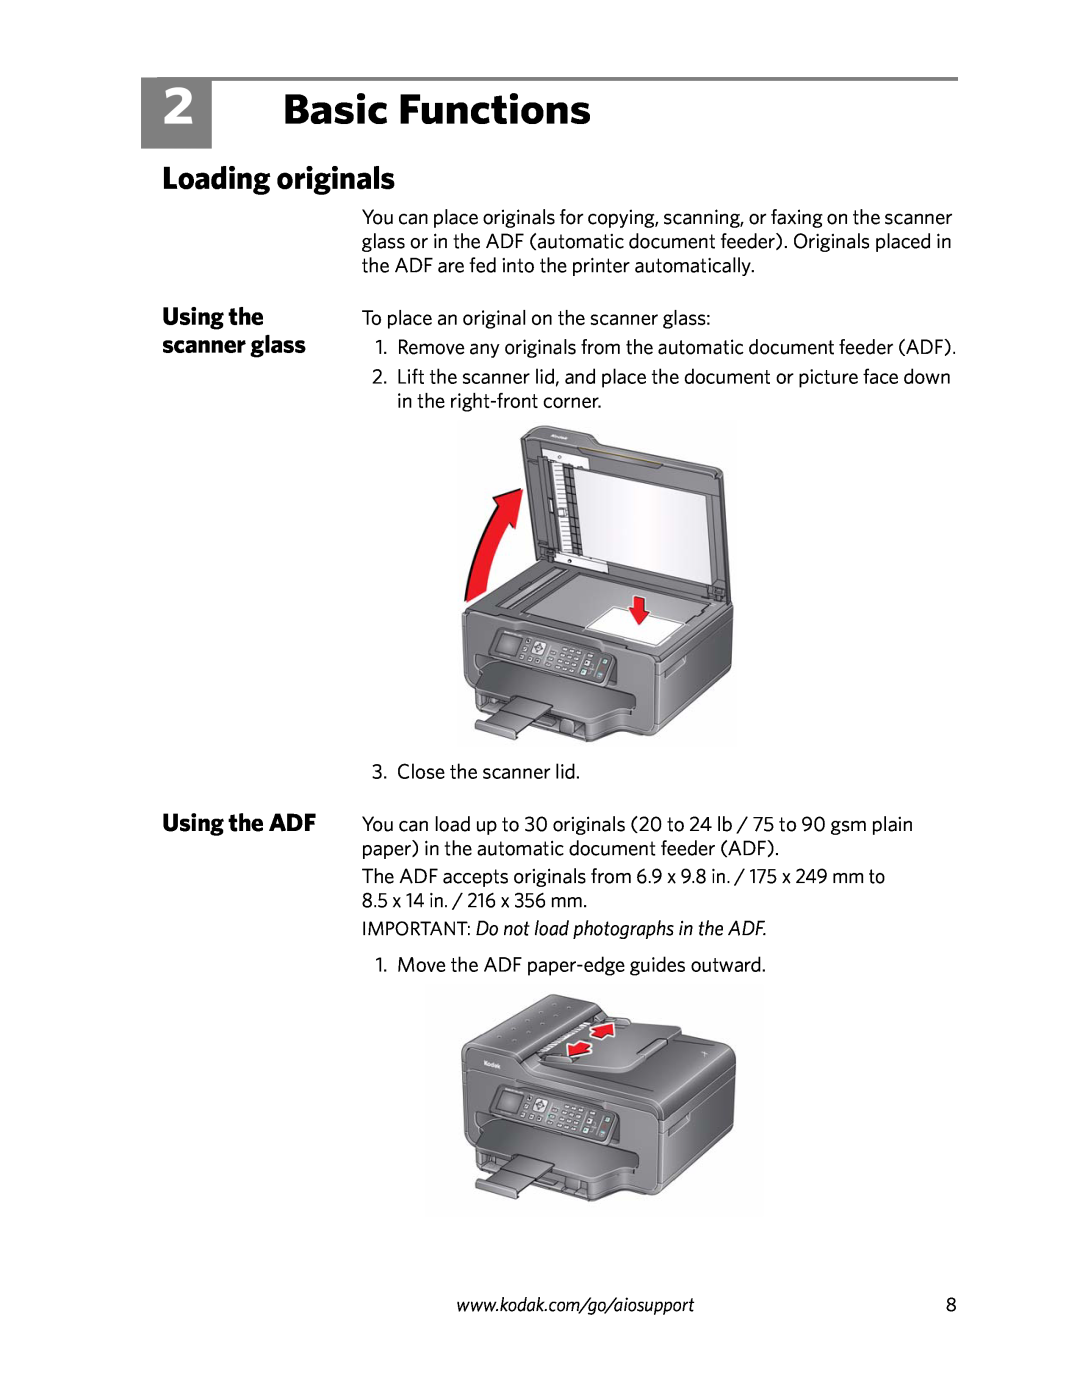 Kodak 6100 Series manual Basic Functions, Loading originals, Using the ADF, Using the scanner glass 